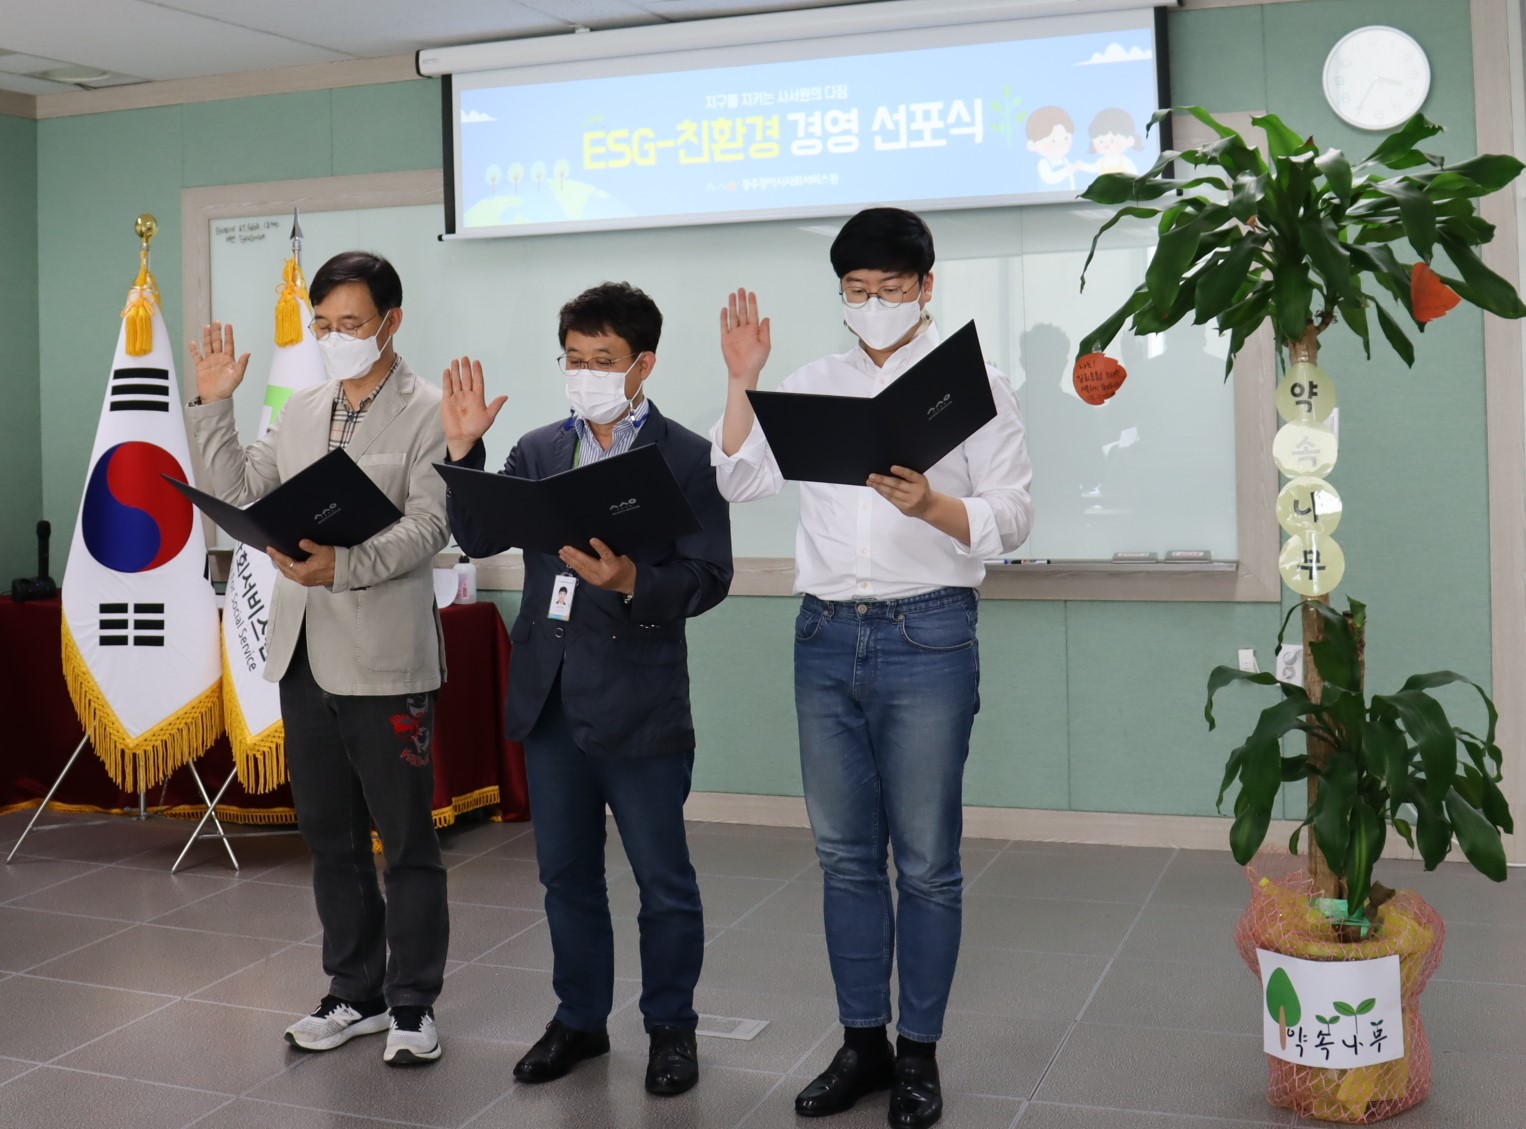 ESG-친환경경영 선포식(21.05.07.) 행사사진